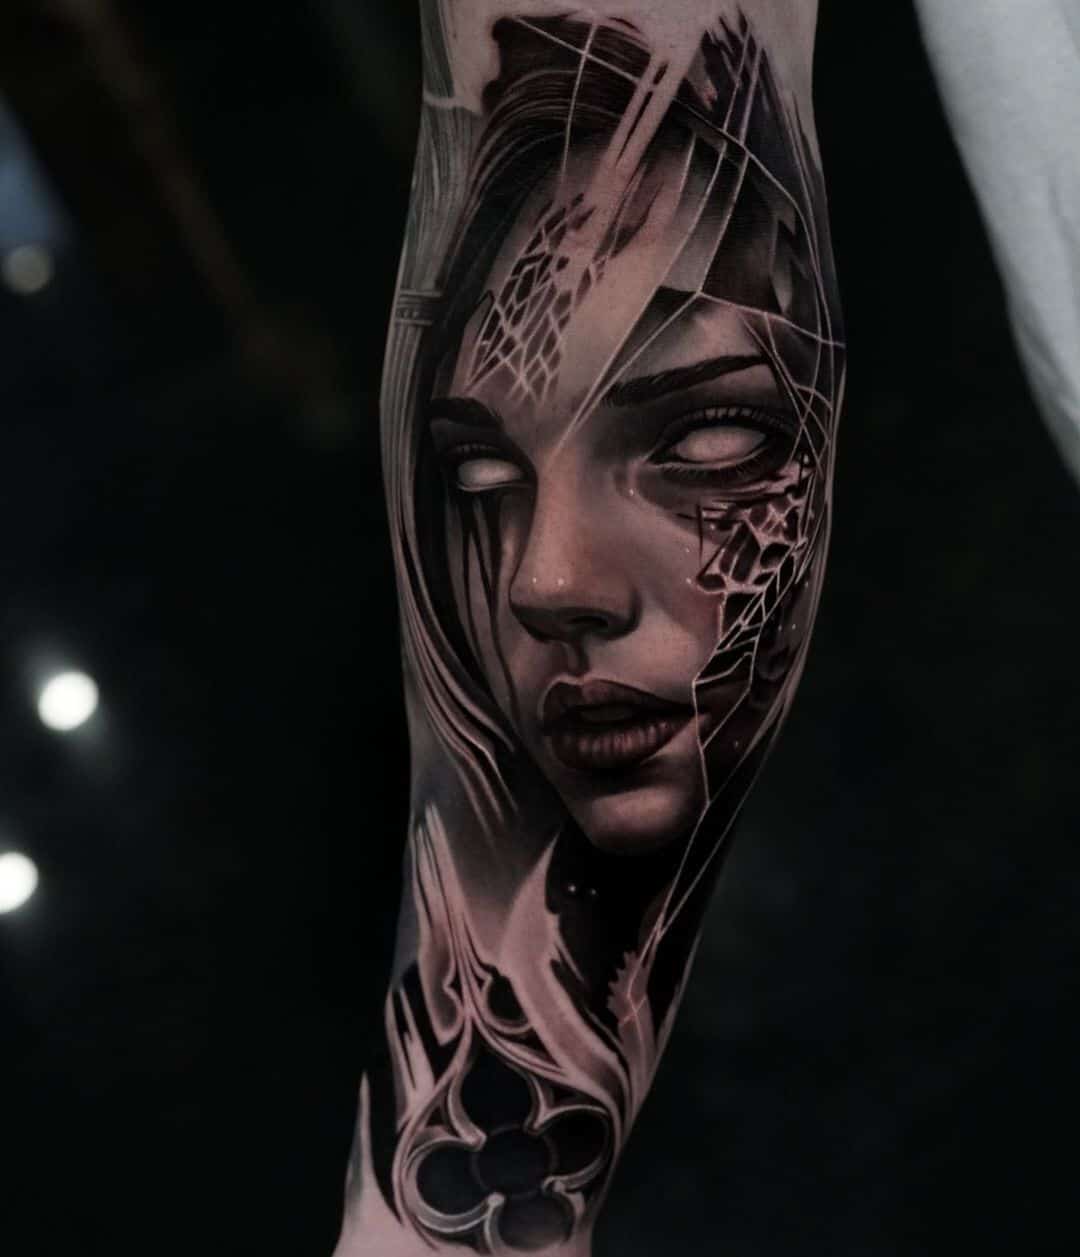 Portrait tattoo by hiramksas